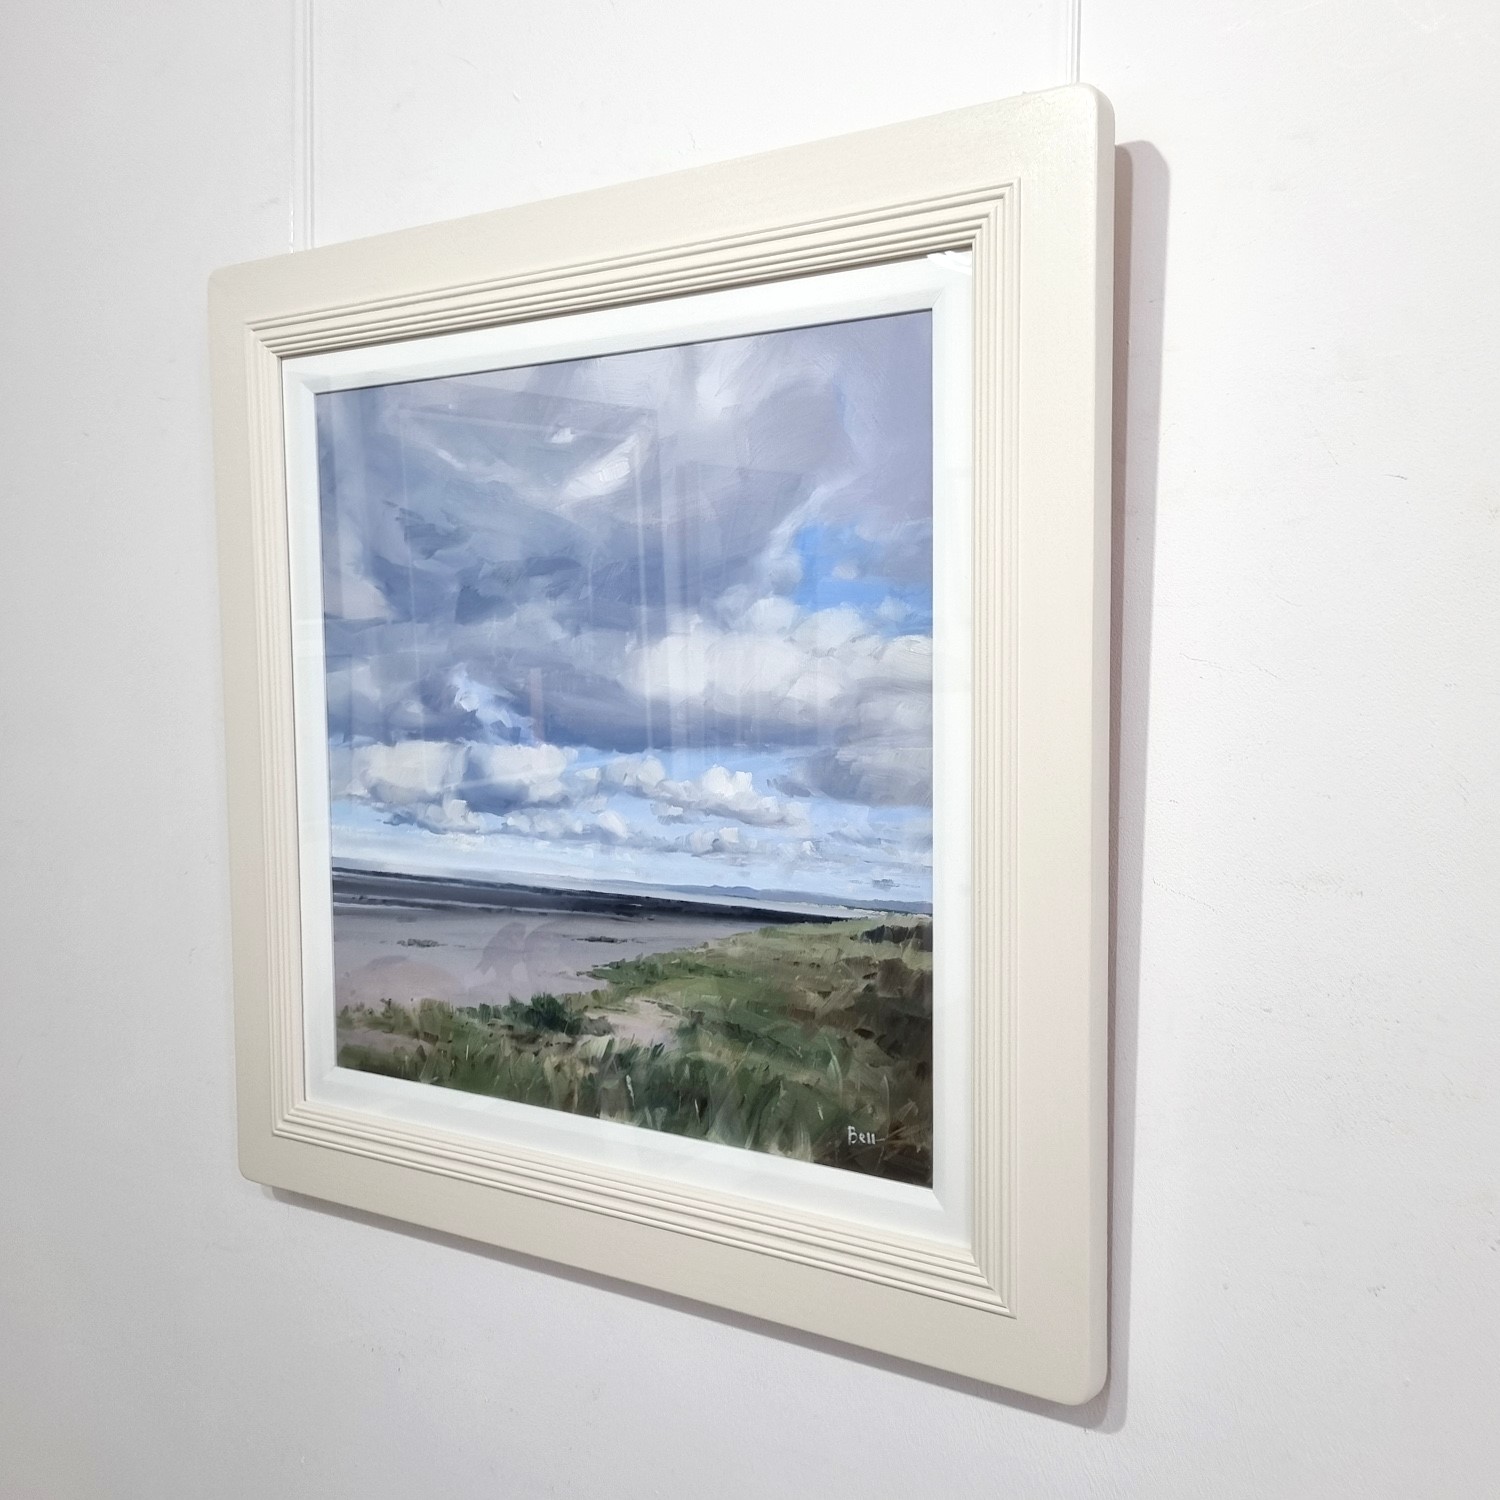 'April Clouds Over Barassie Beach' by artist John Bell